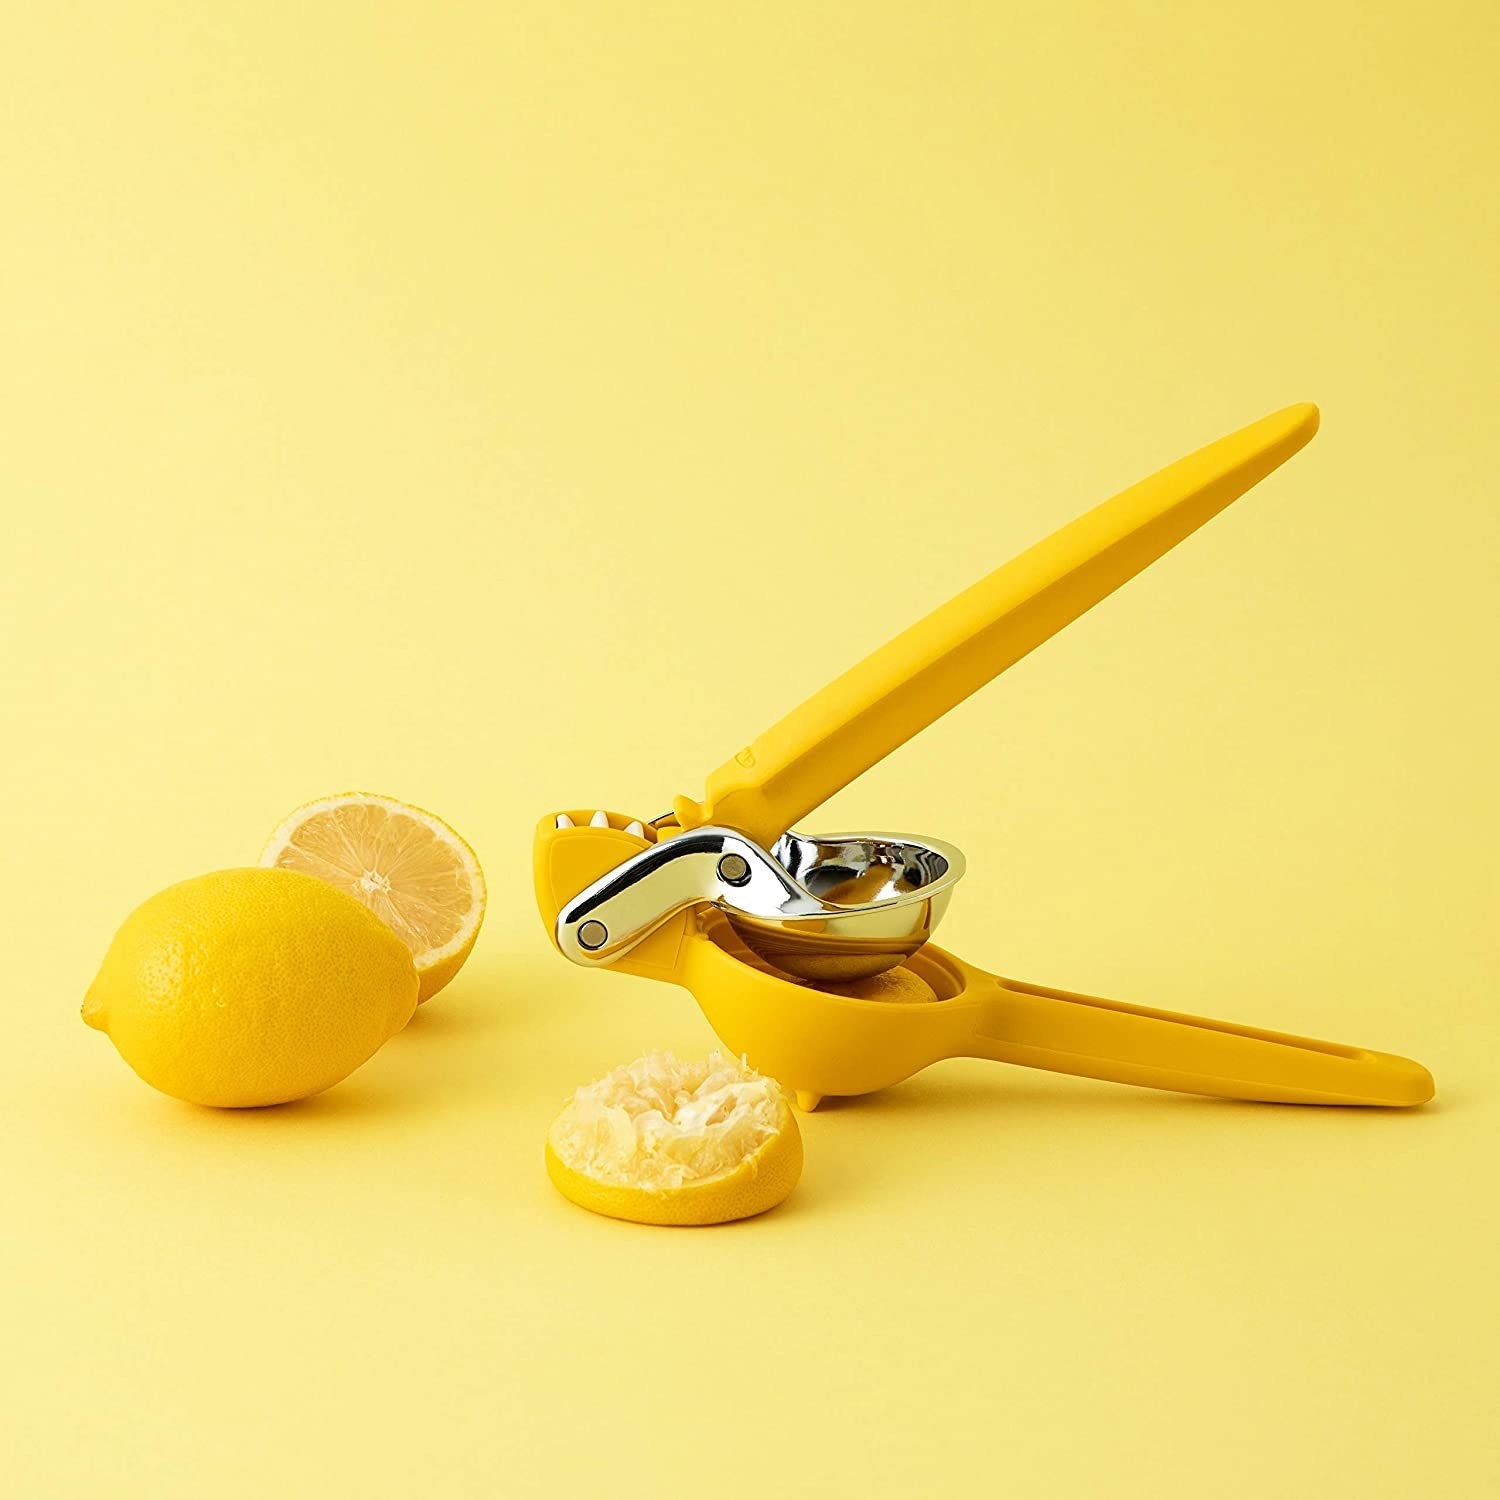 Yellow citrus juicer next to lemon slices